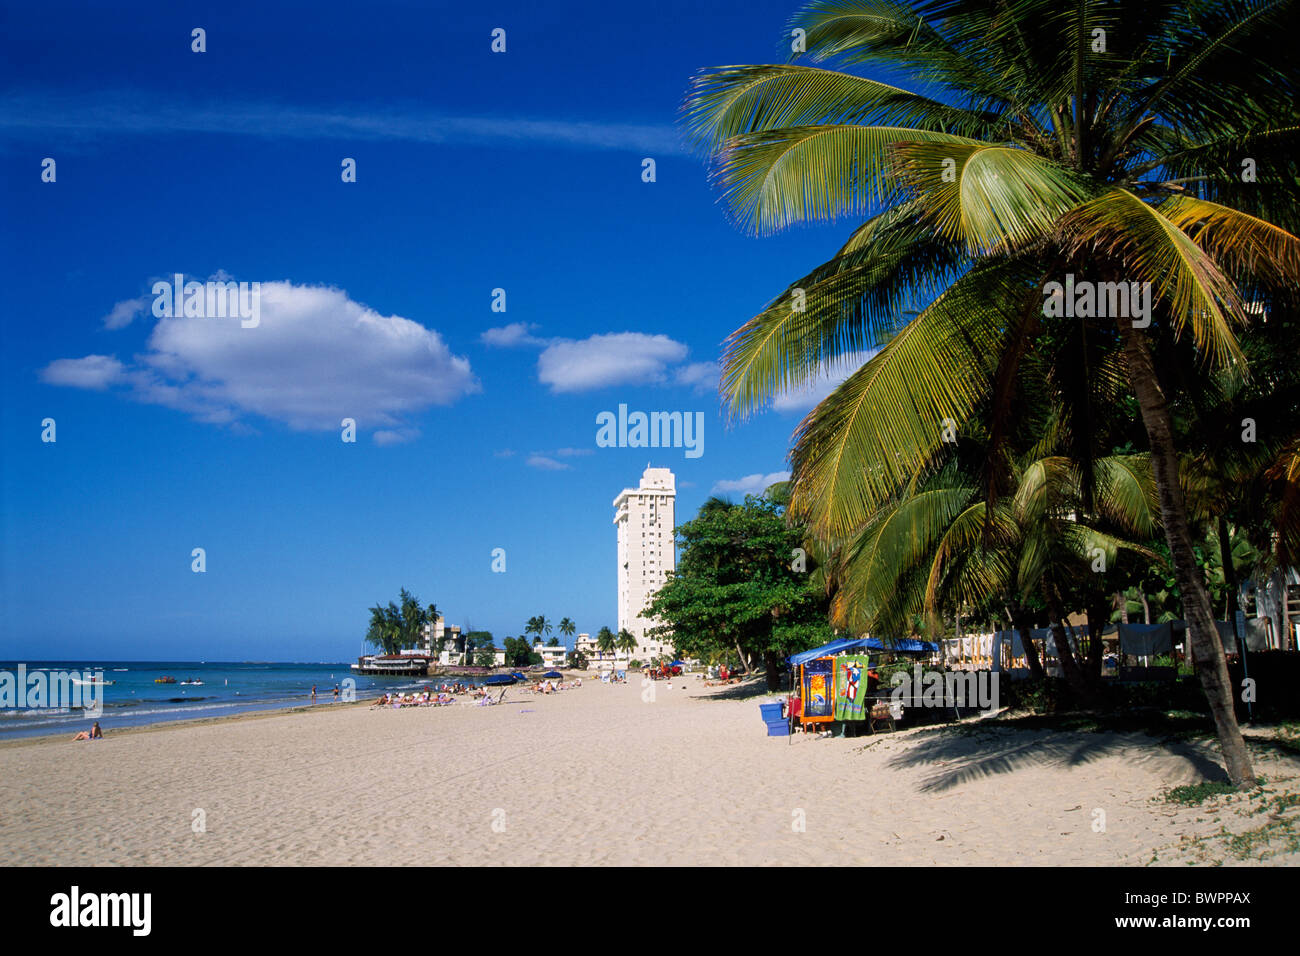 Puerto Rico Isla Verde Beach San Juan Caribbean island Greater Antilles beach palm trees holiday vacation tr Stock Photo